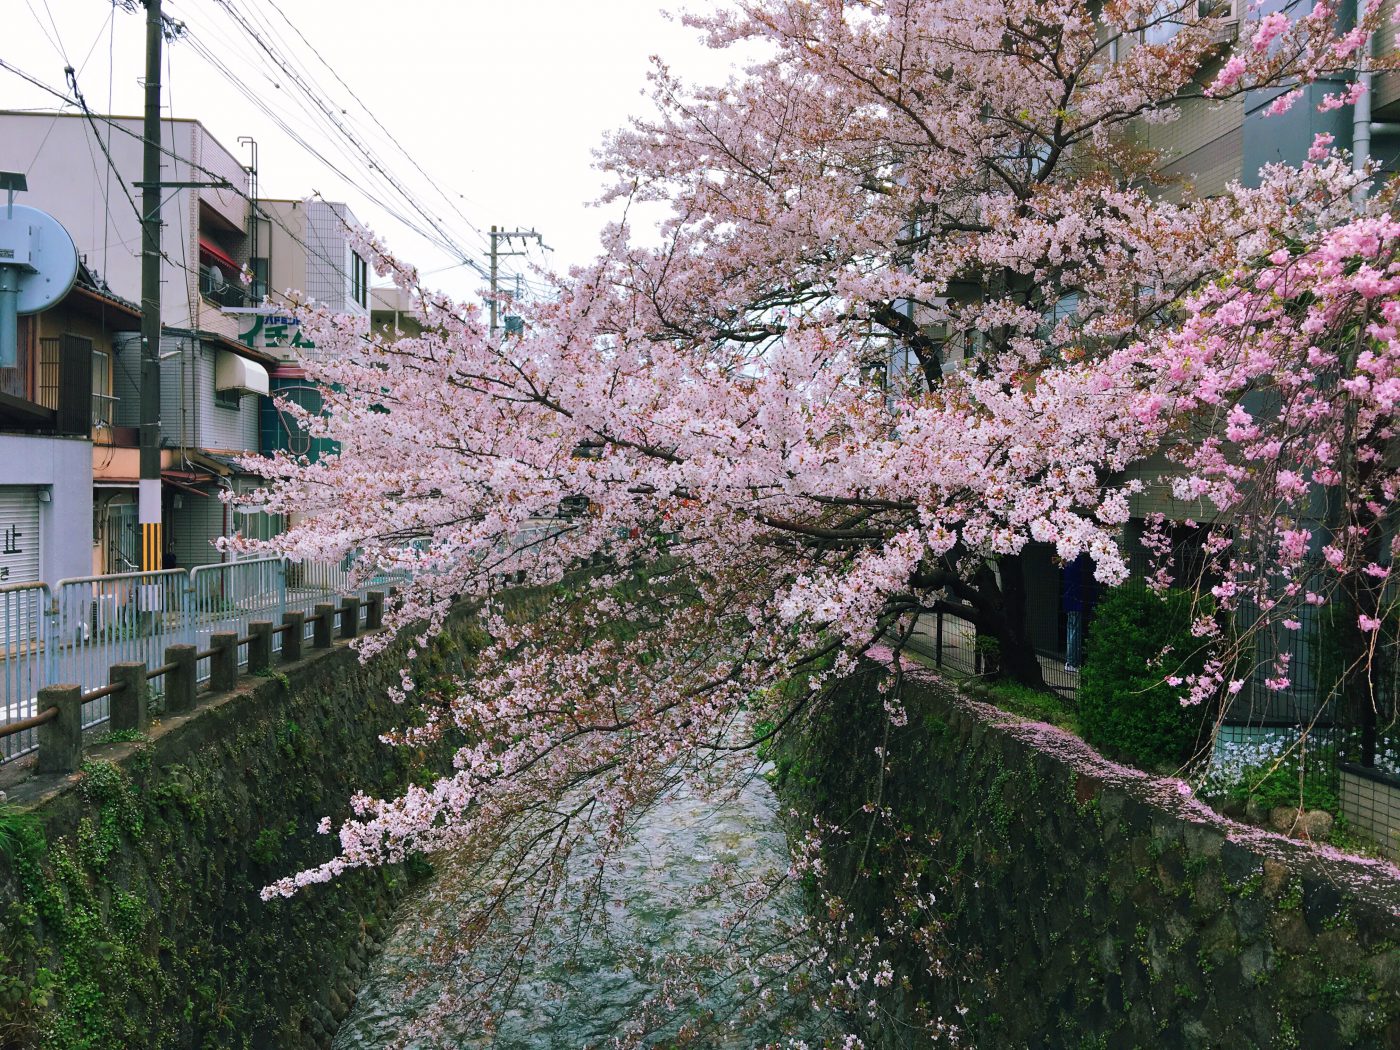 A neighborhood river in Kyoto full of Sakura